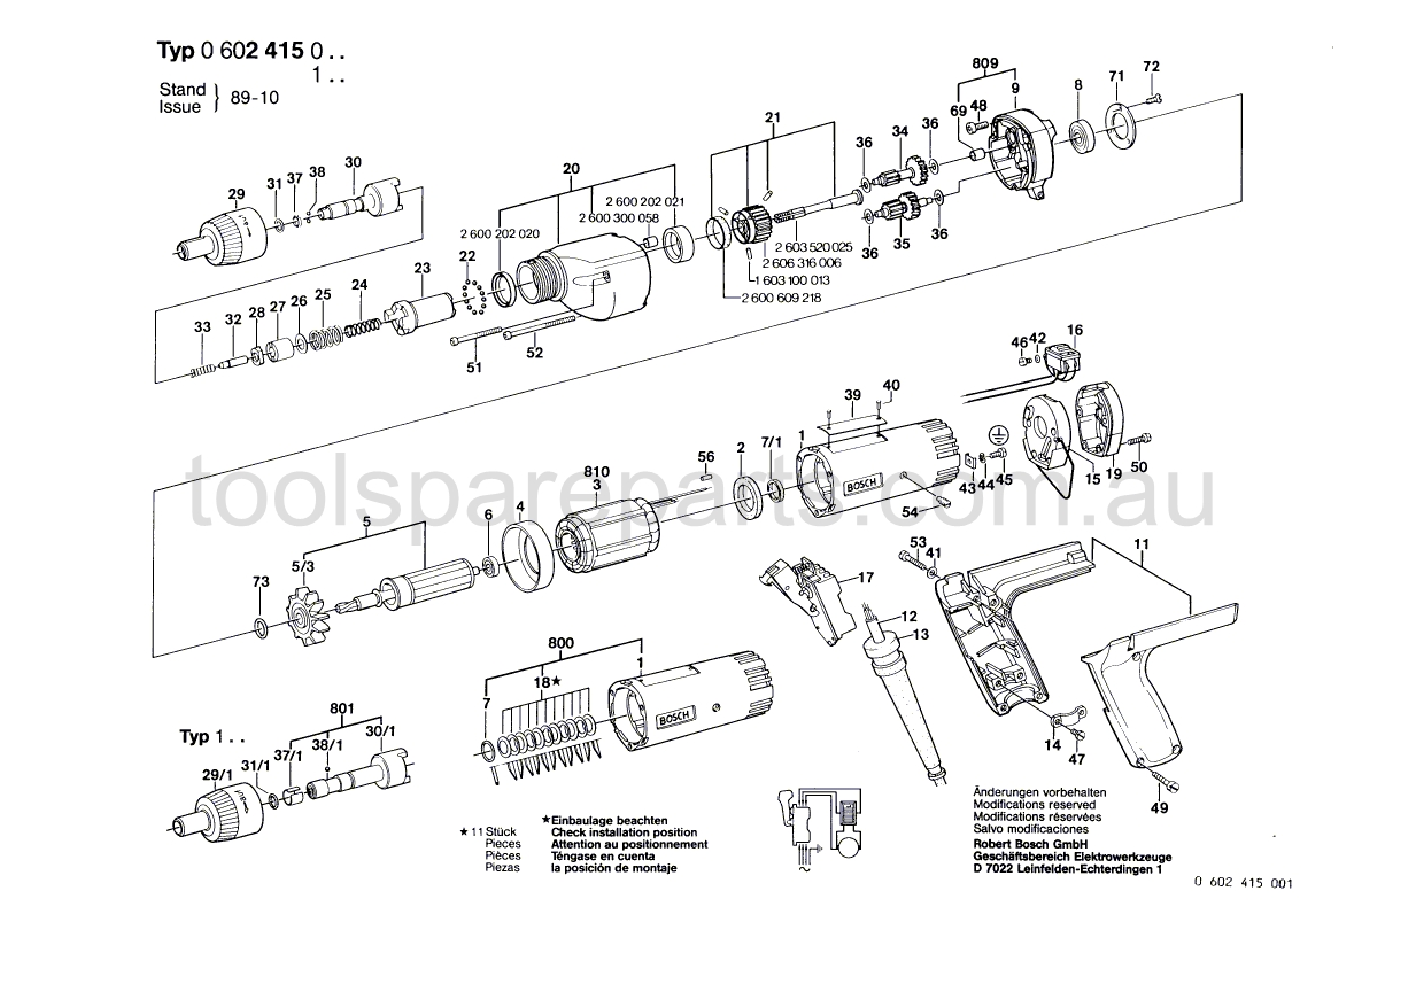 Bosch ---- 0602415011  Diagram 1